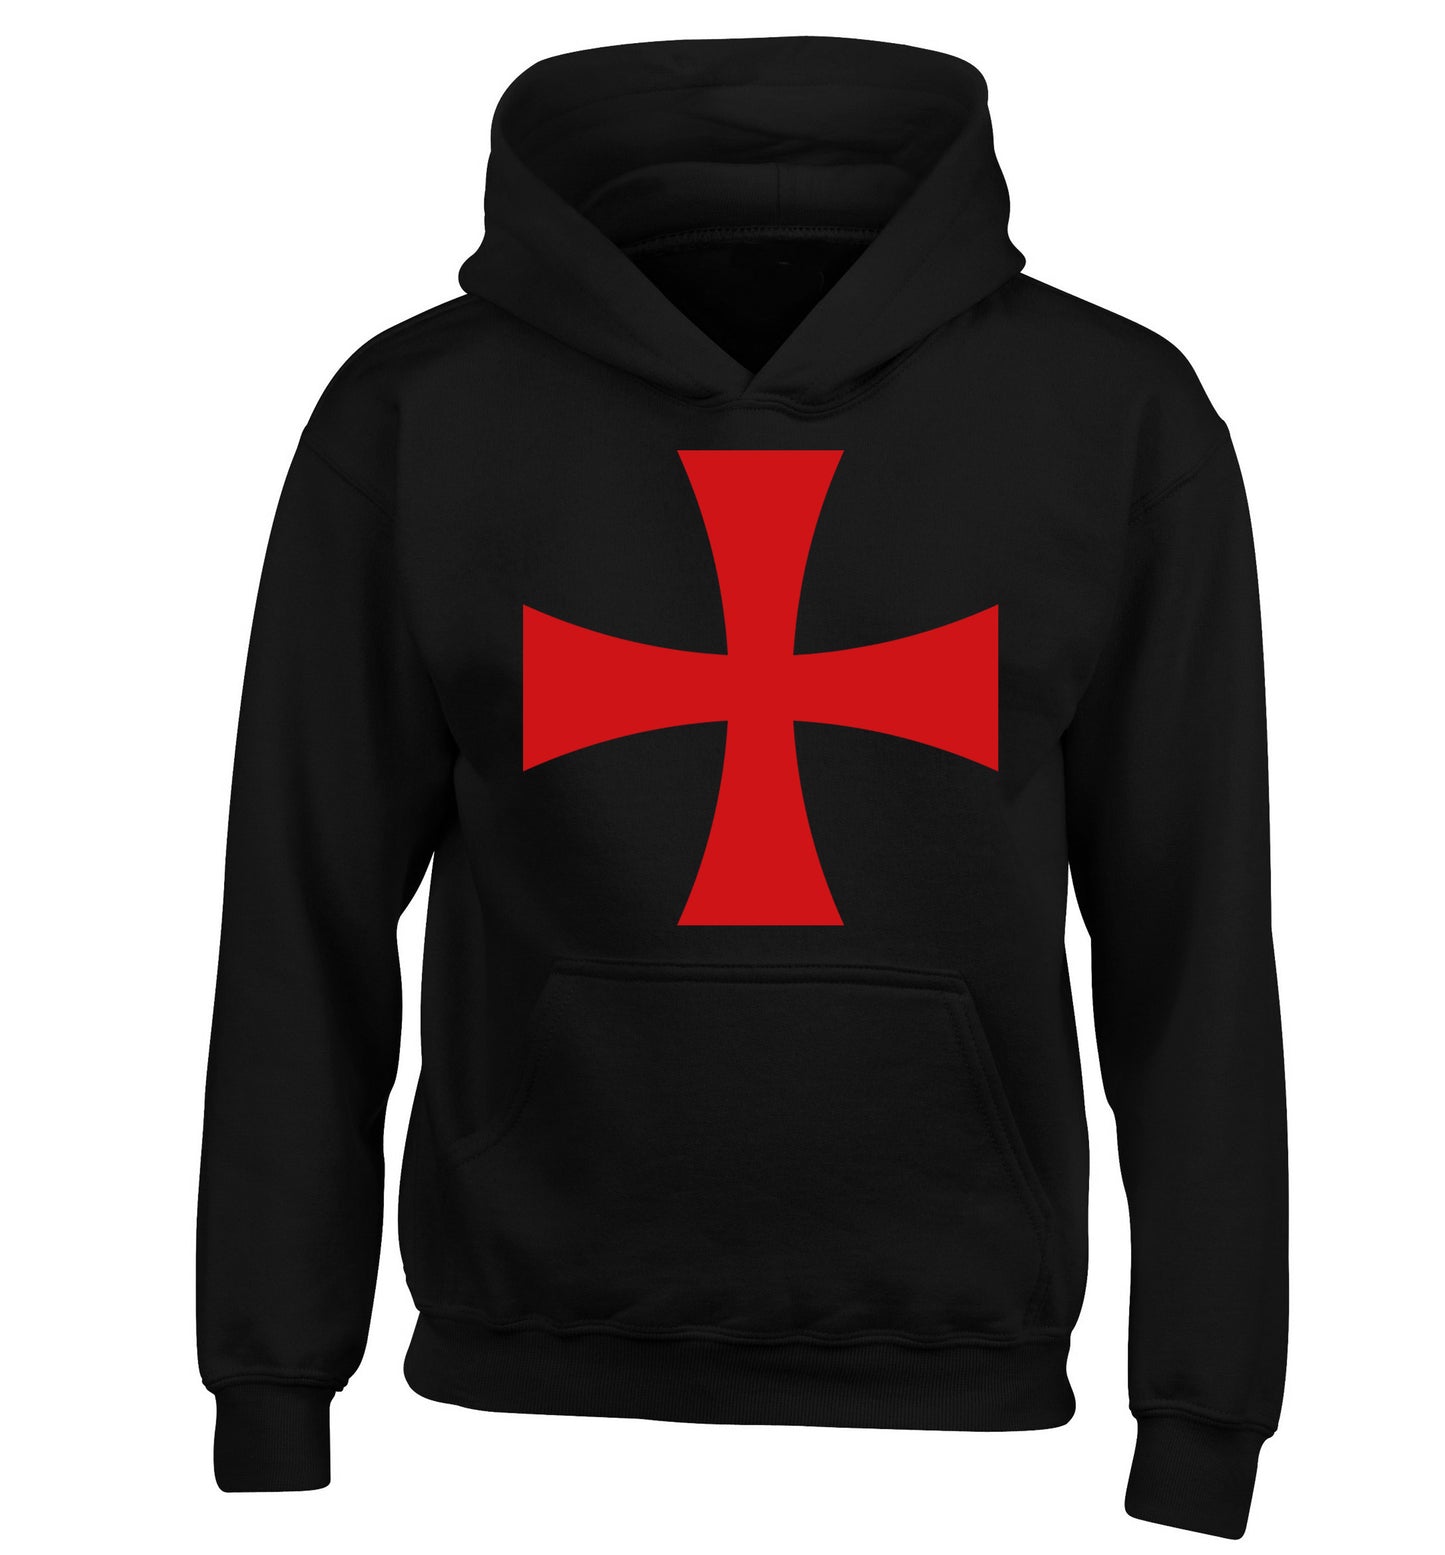 Knights Templar cross children's black hoodie 12-14 Years